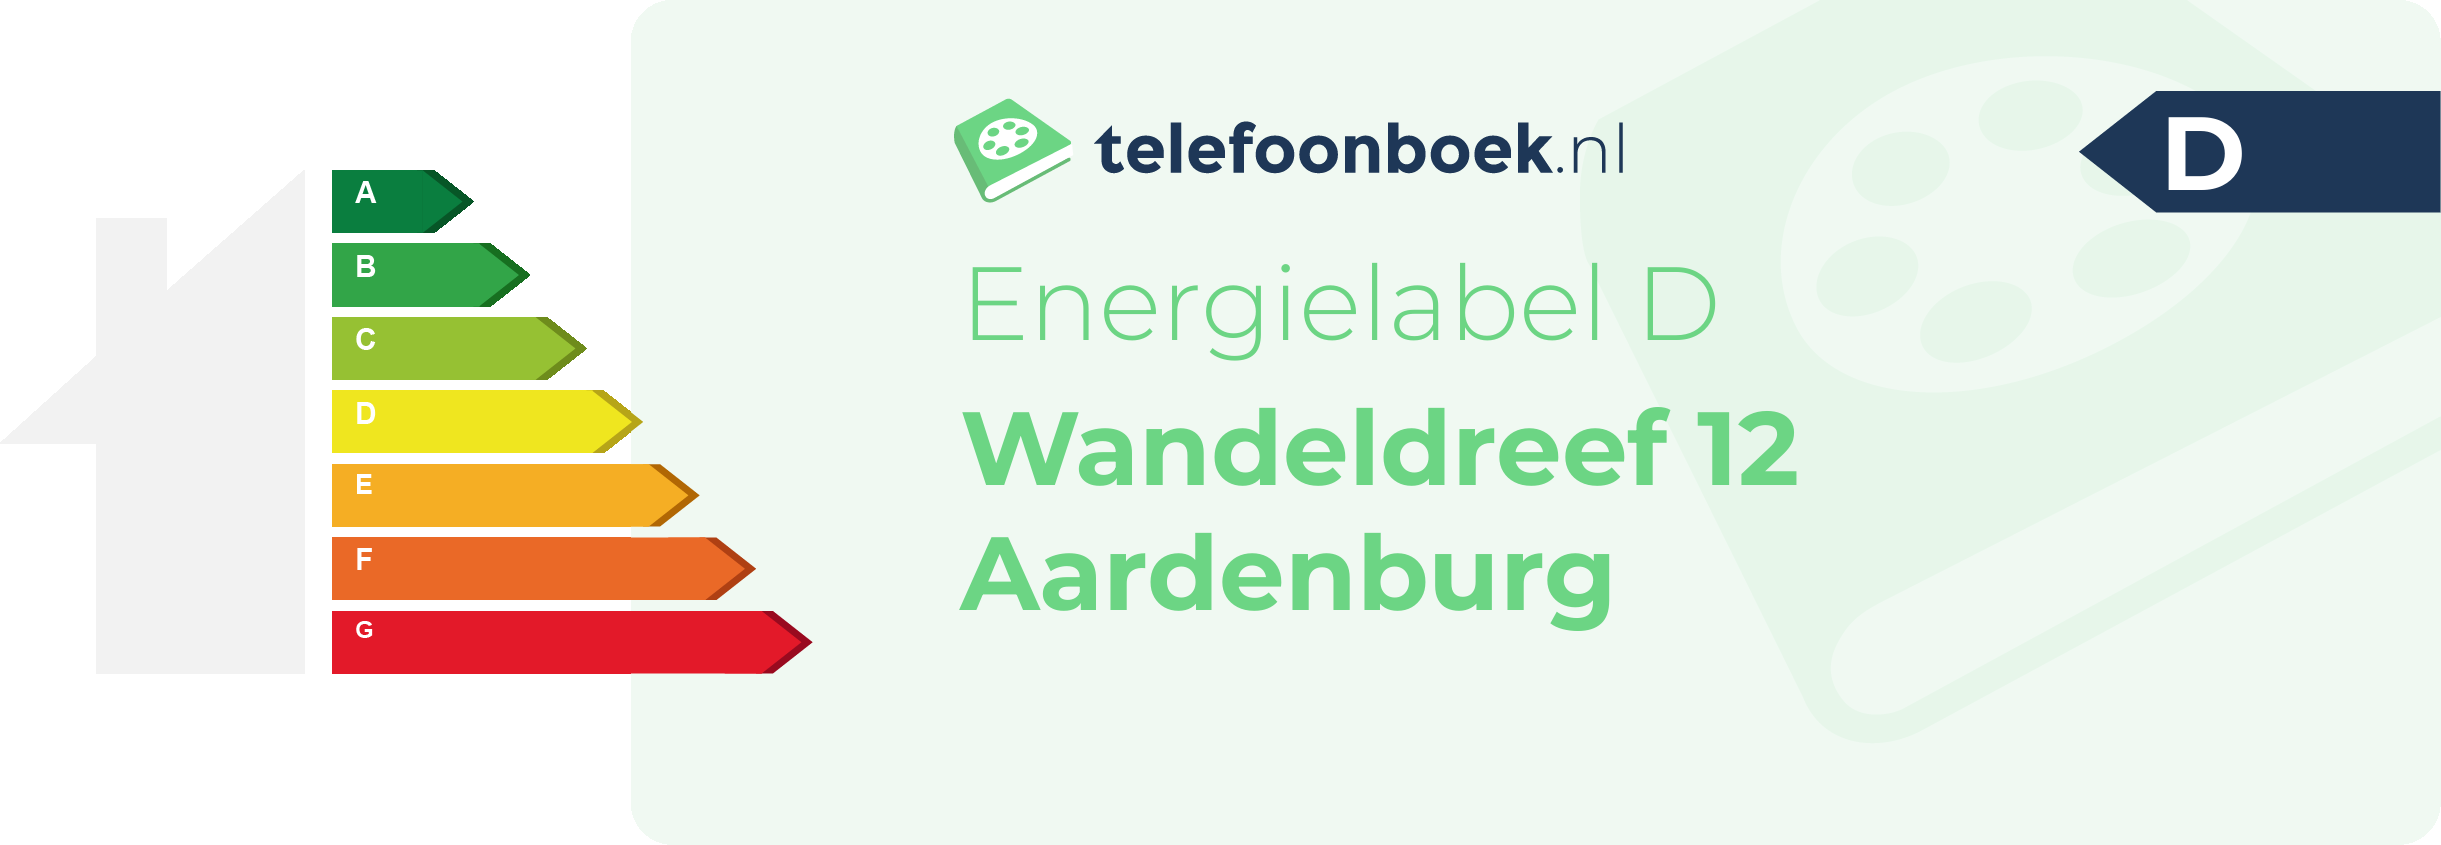 Energielabel Wandeldreef 12 Aardenburg